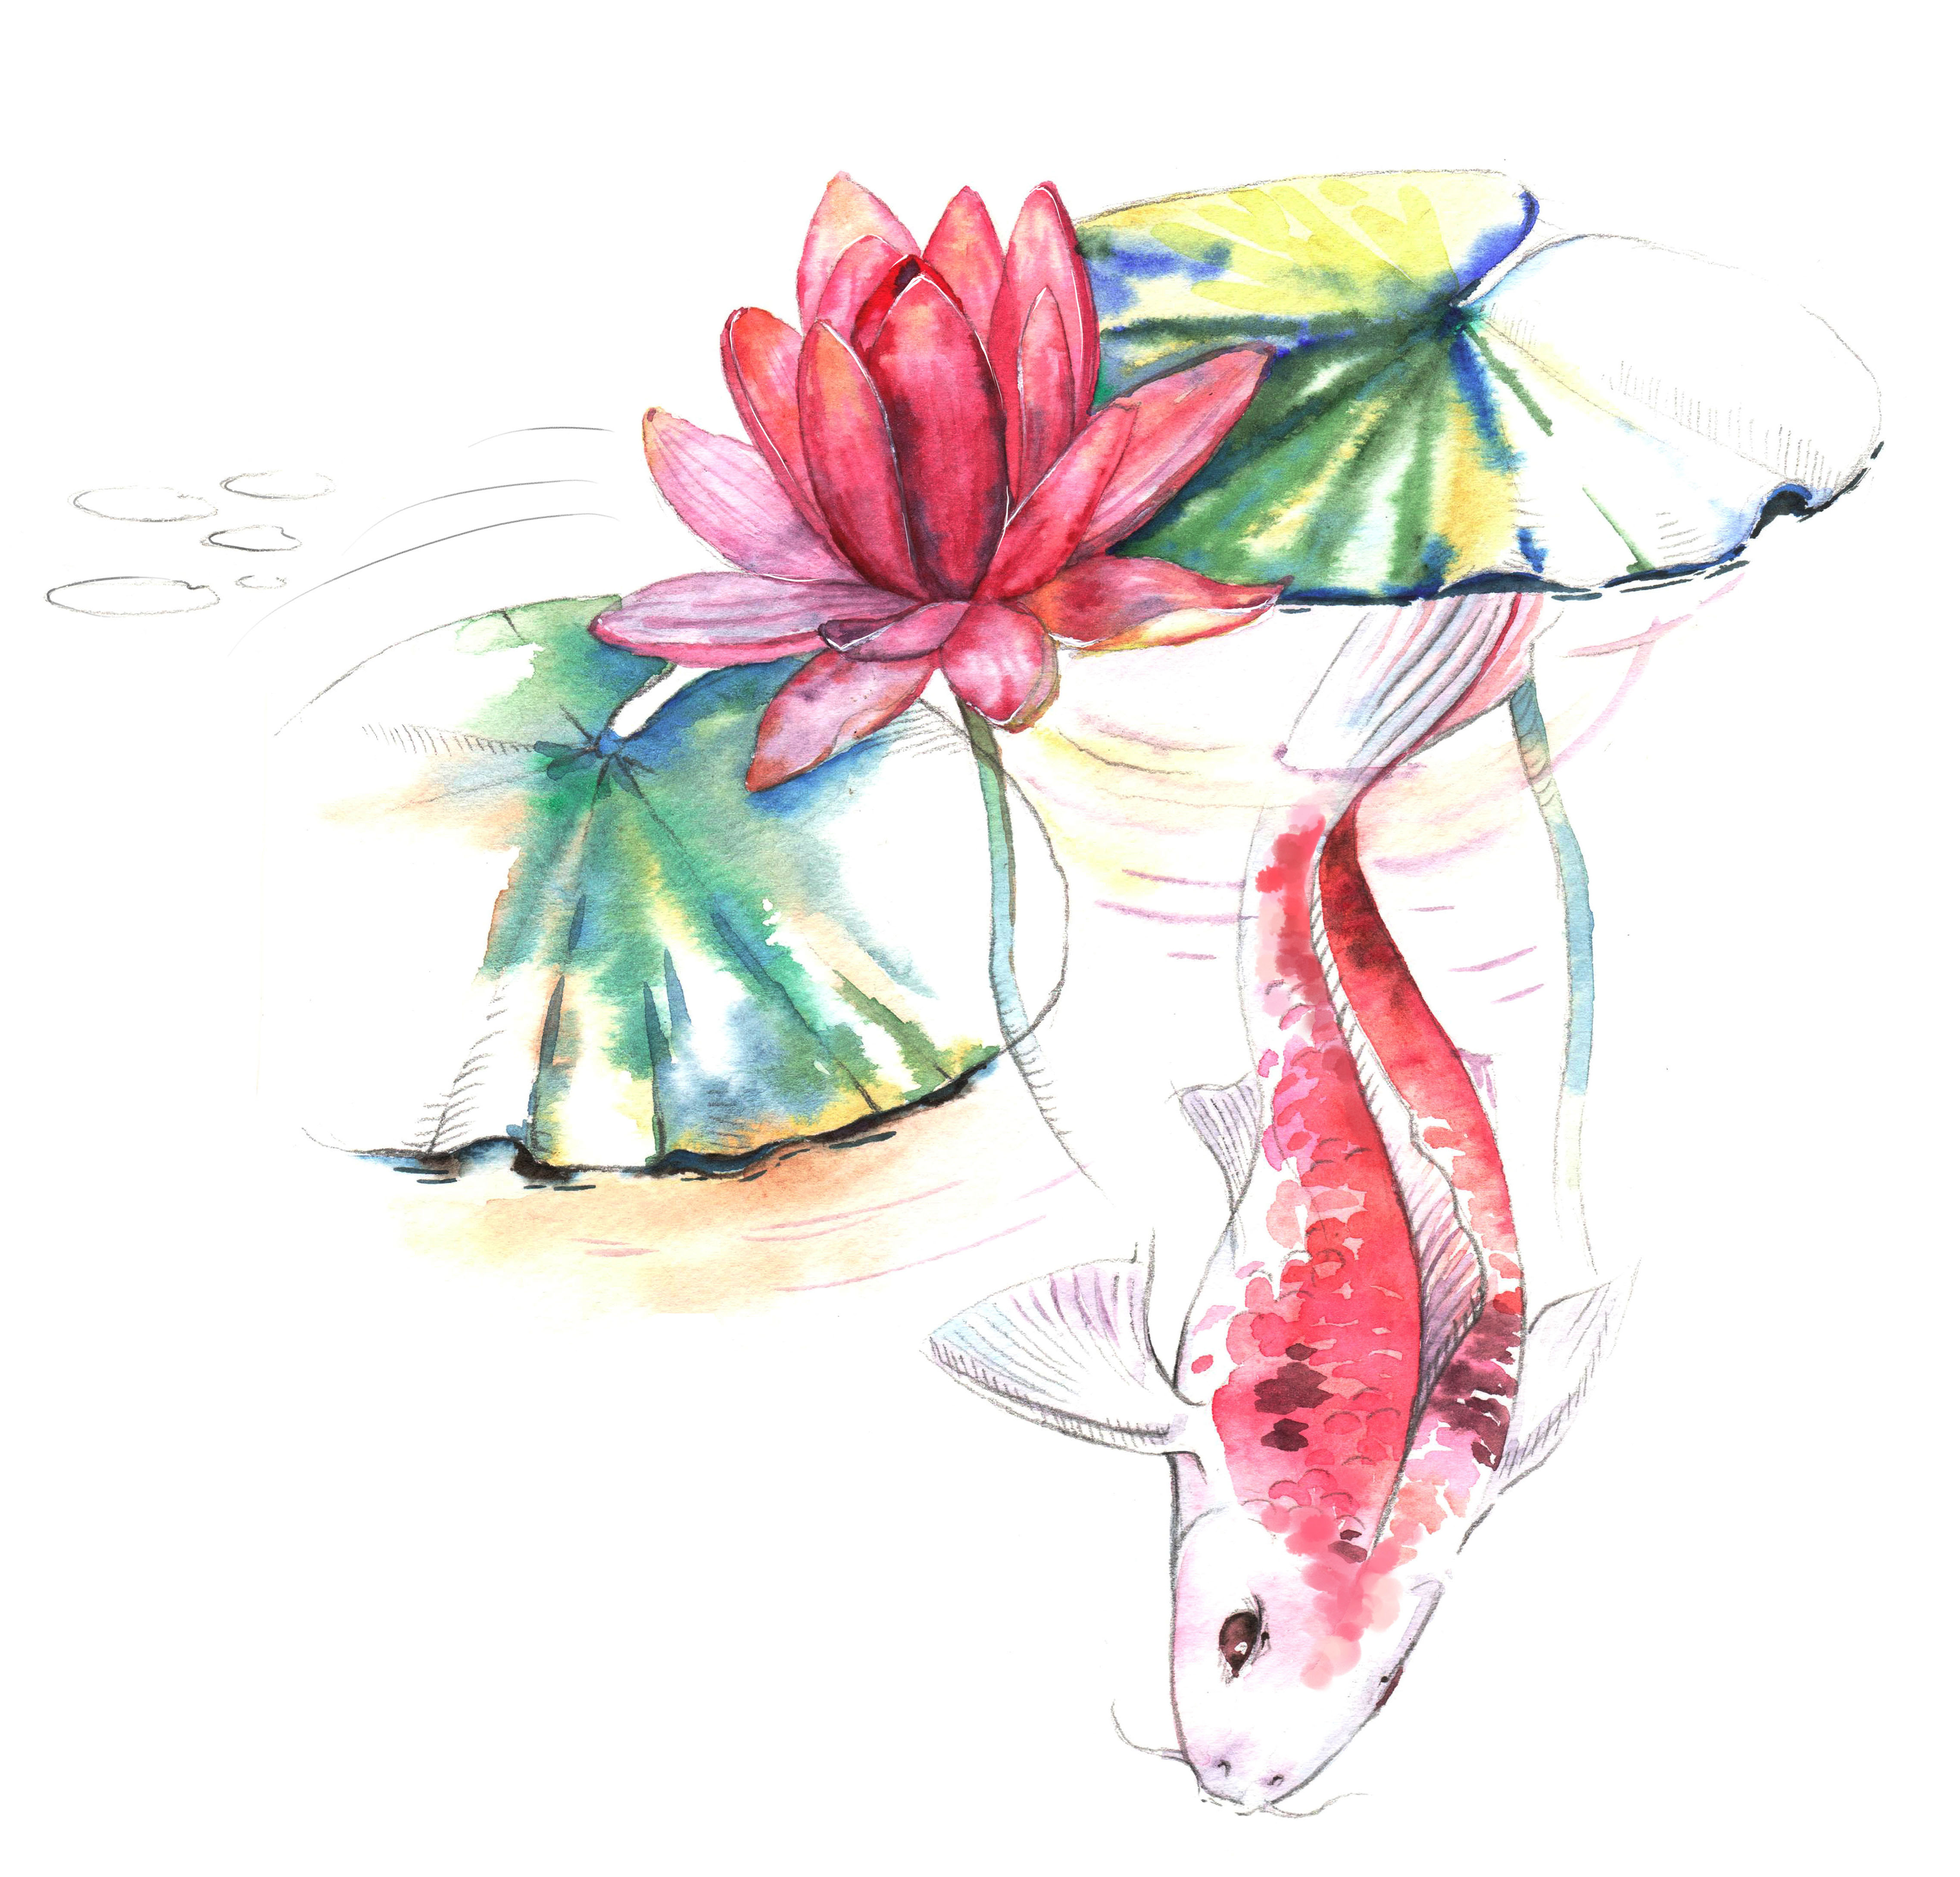 Hand-drawn watercolor illustration of the Koi carp fish in the w